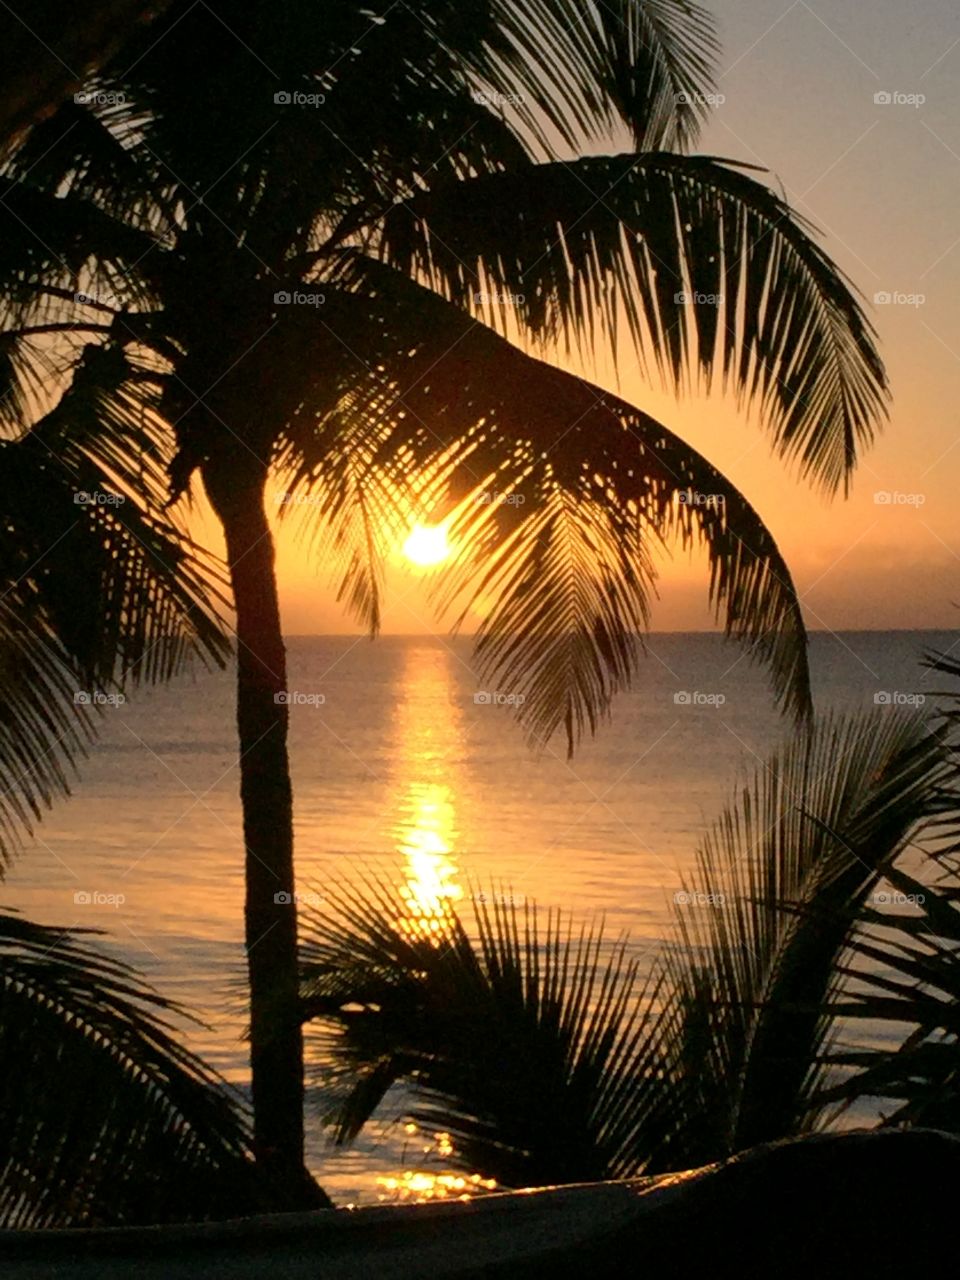 Riviera maya sunset tulum 